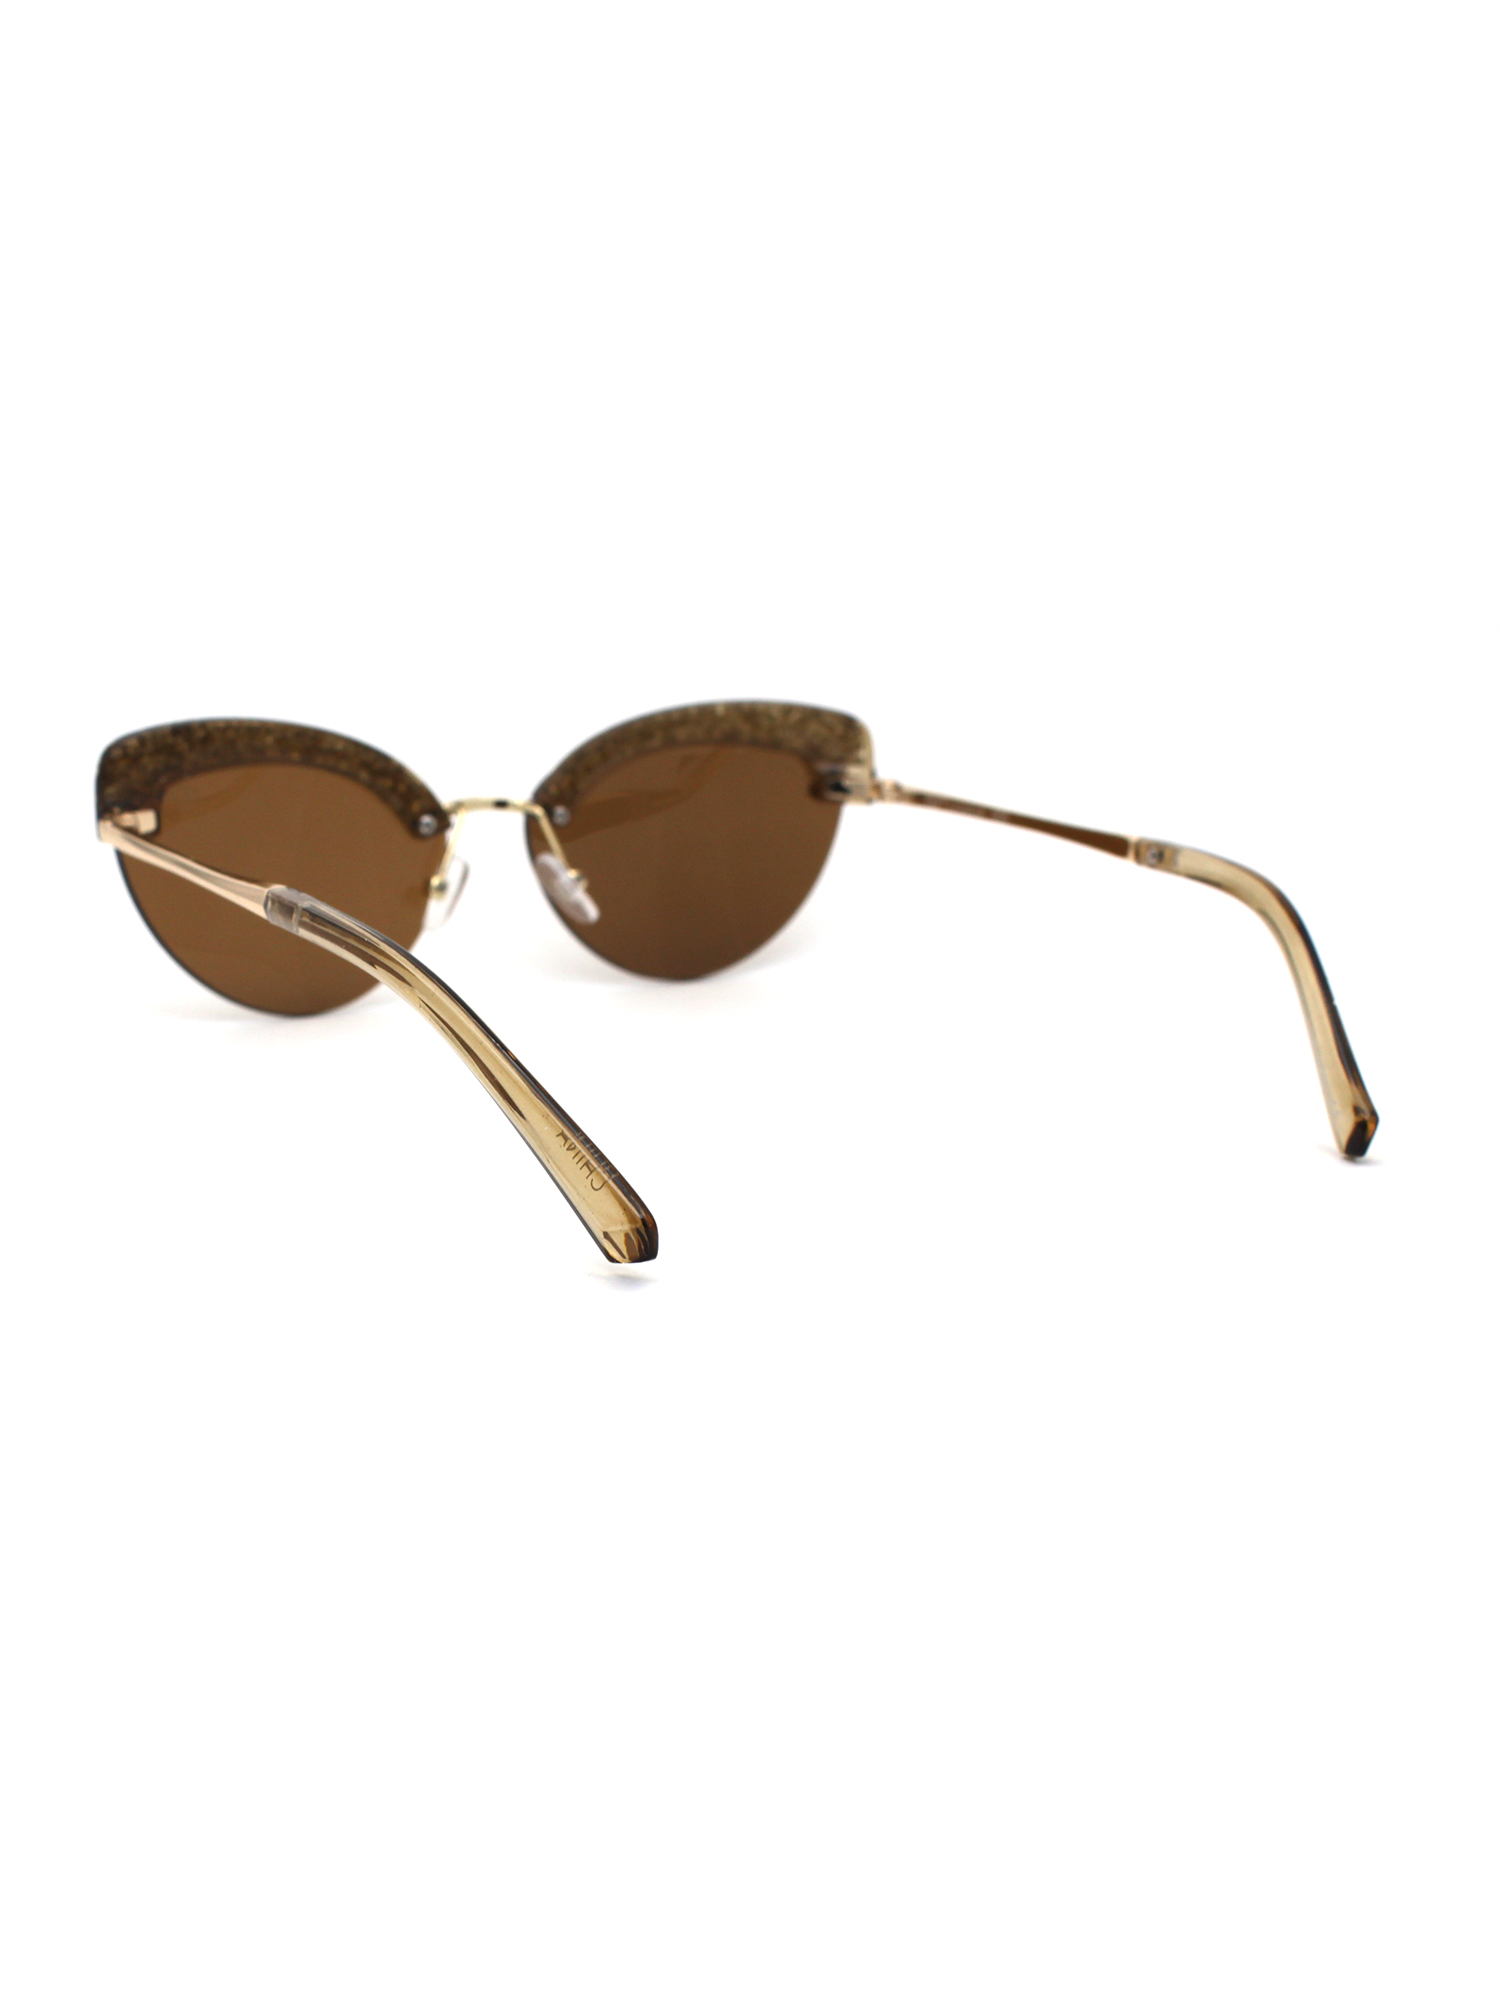 Womens Glitter Nugget Stud Half Rim Round Cat Eye Sunglasses Gold Beige Brown - image 4 of 4